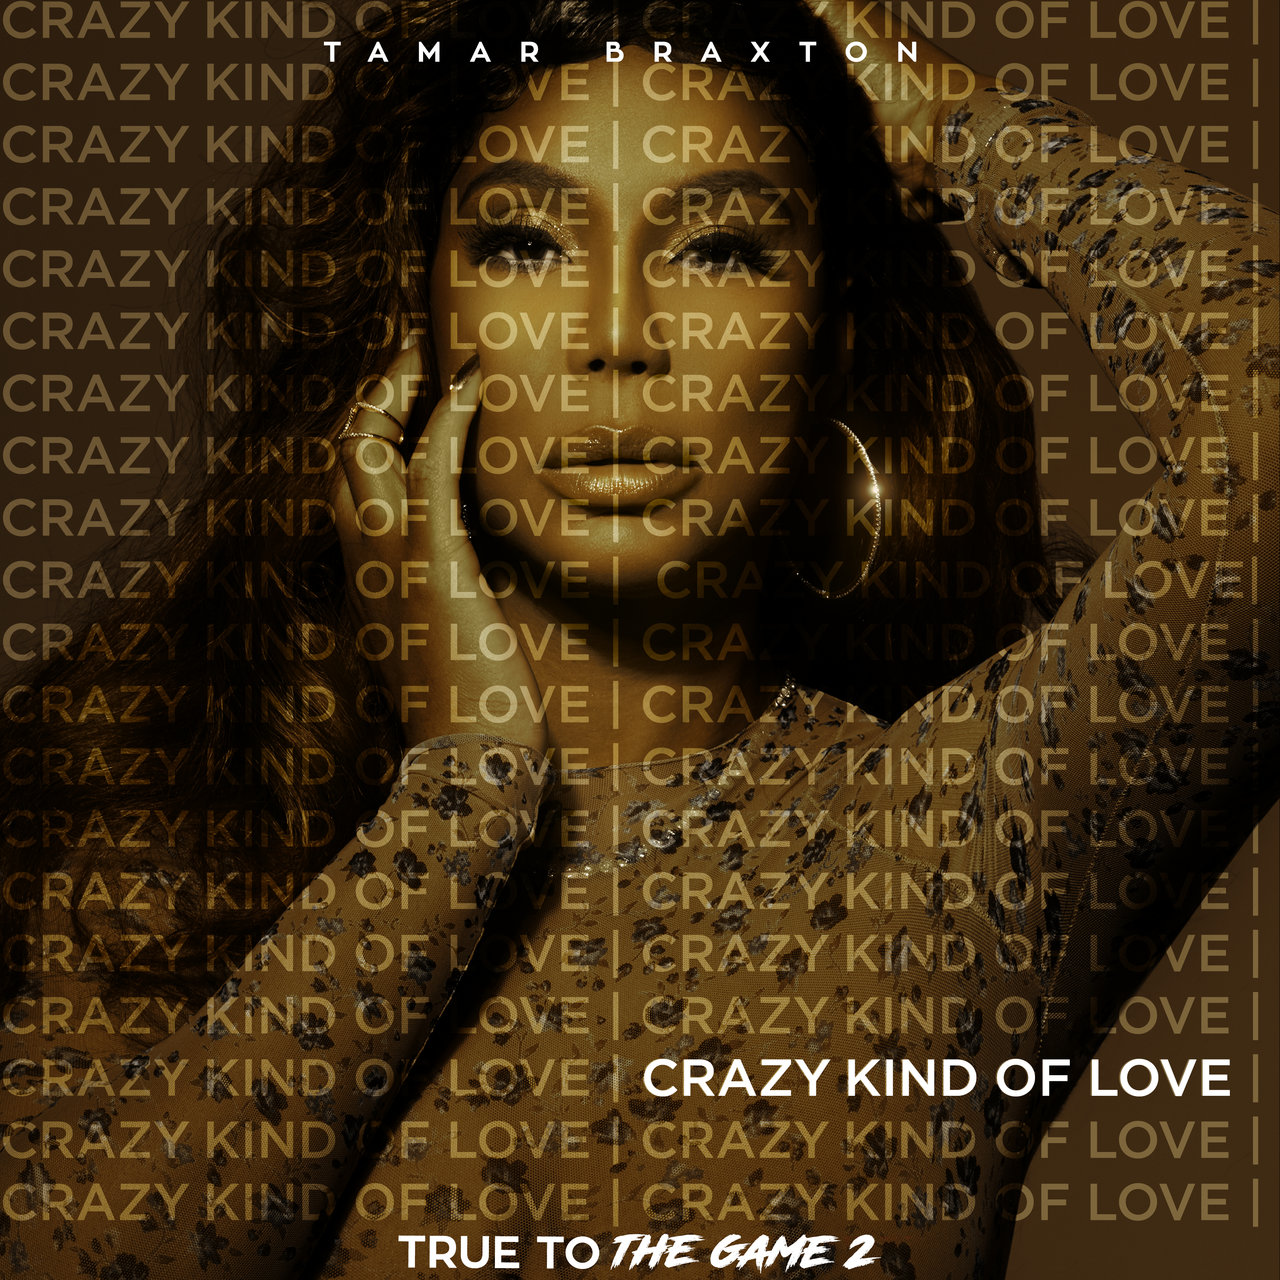 Tamar Braxton - Crazy Kind Of Love (Cover)